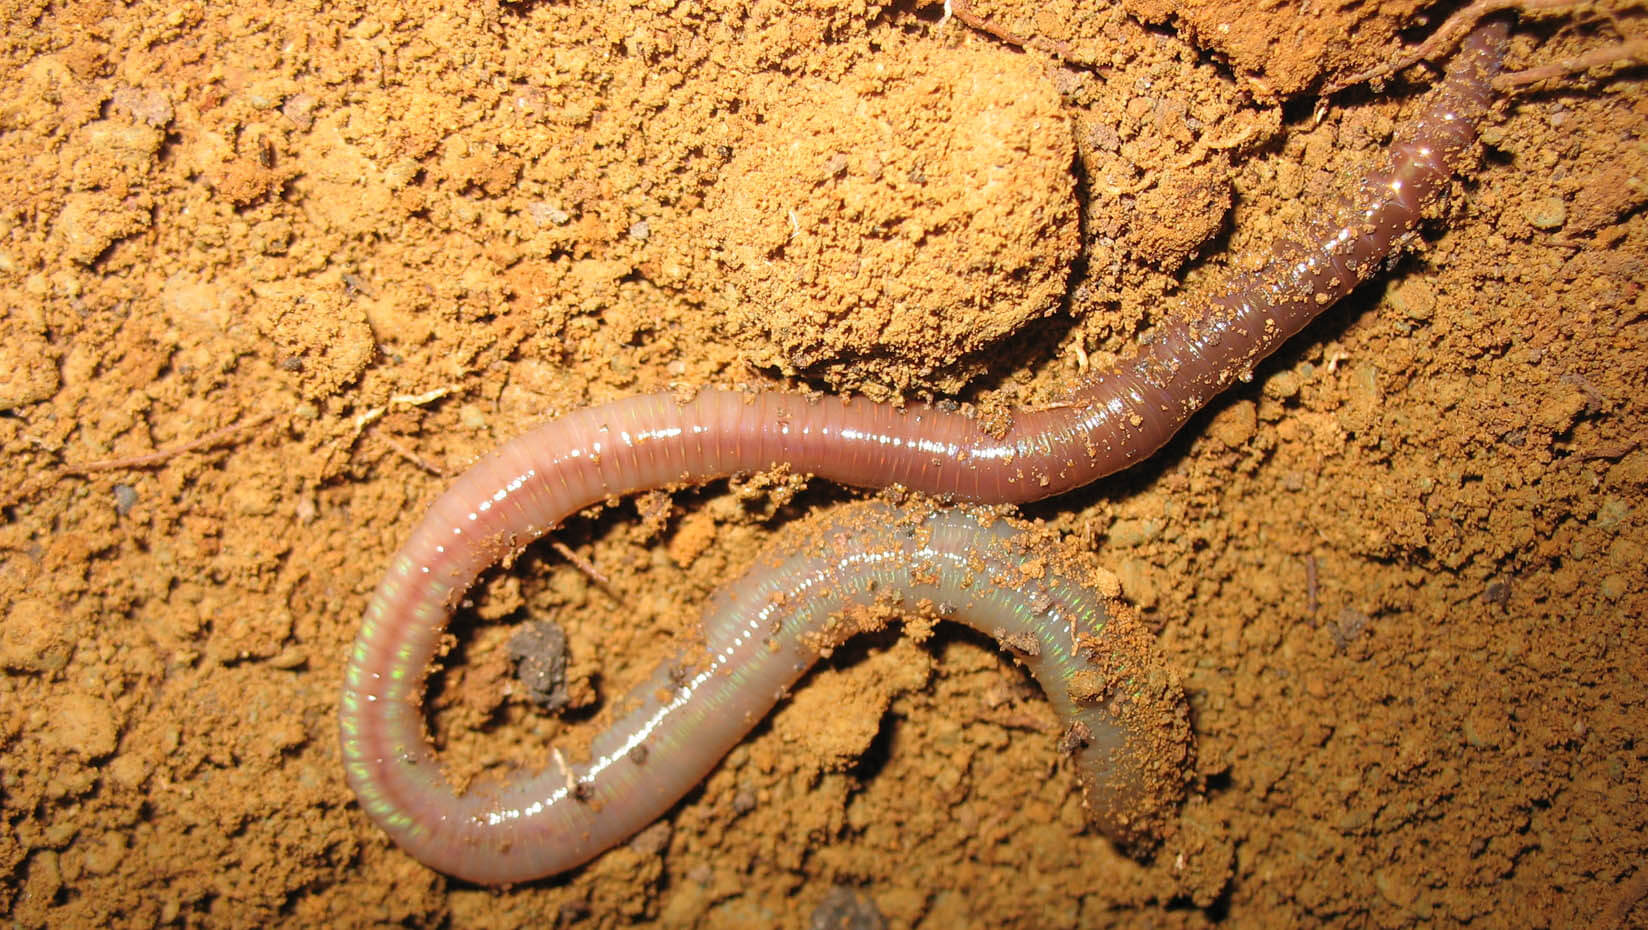 UMaine scientists discover invasive earthworms in Aroostook